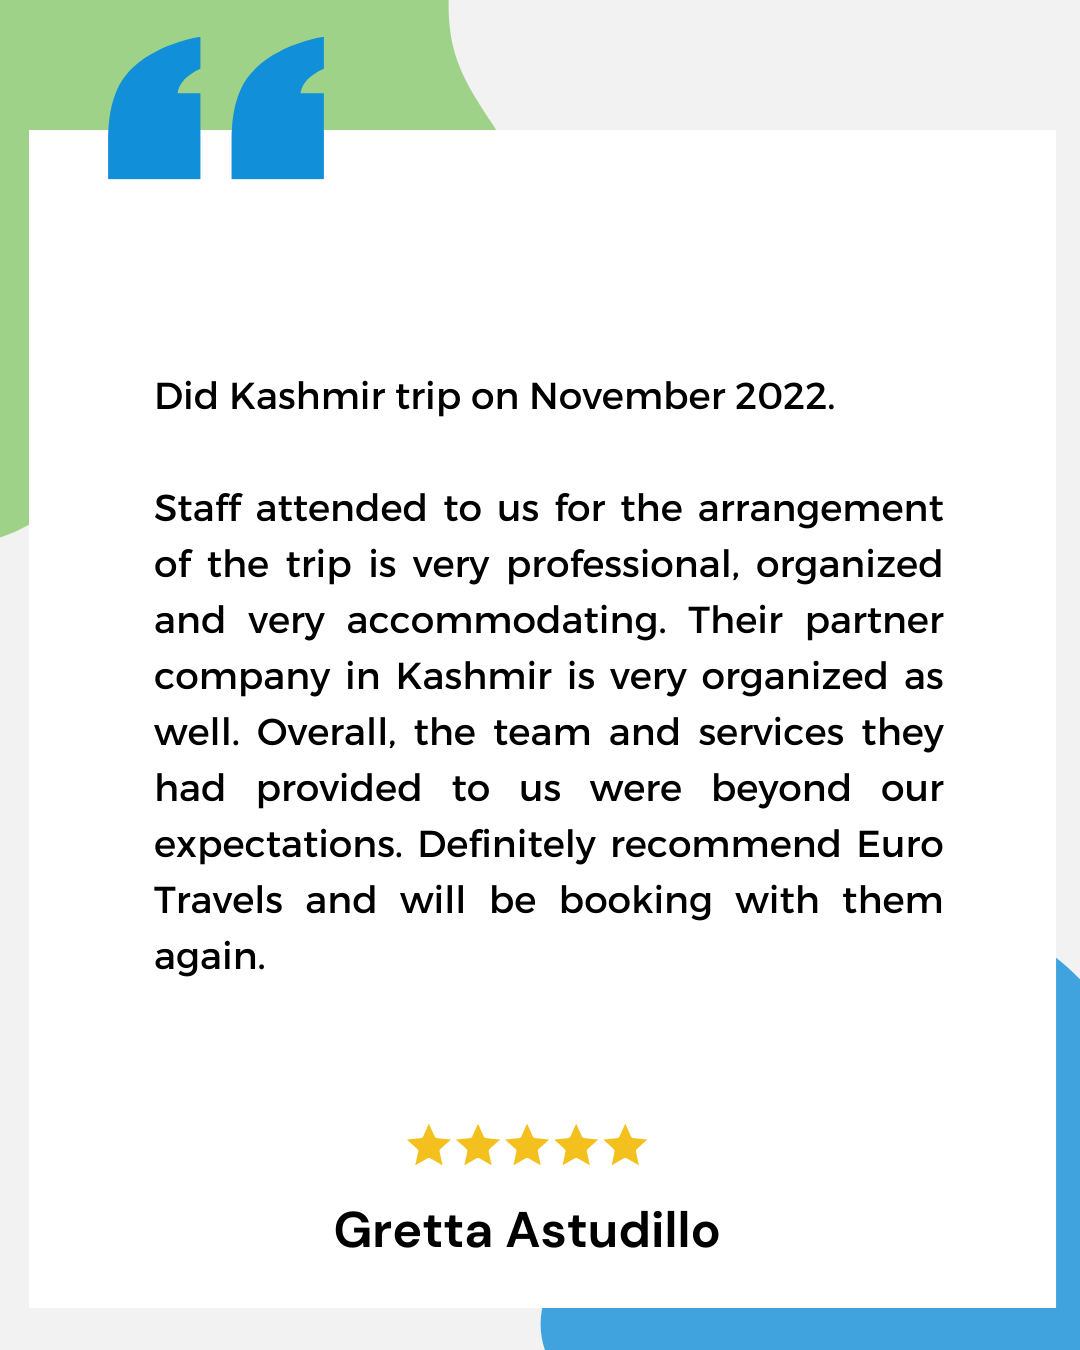 Kashmir_review (1)